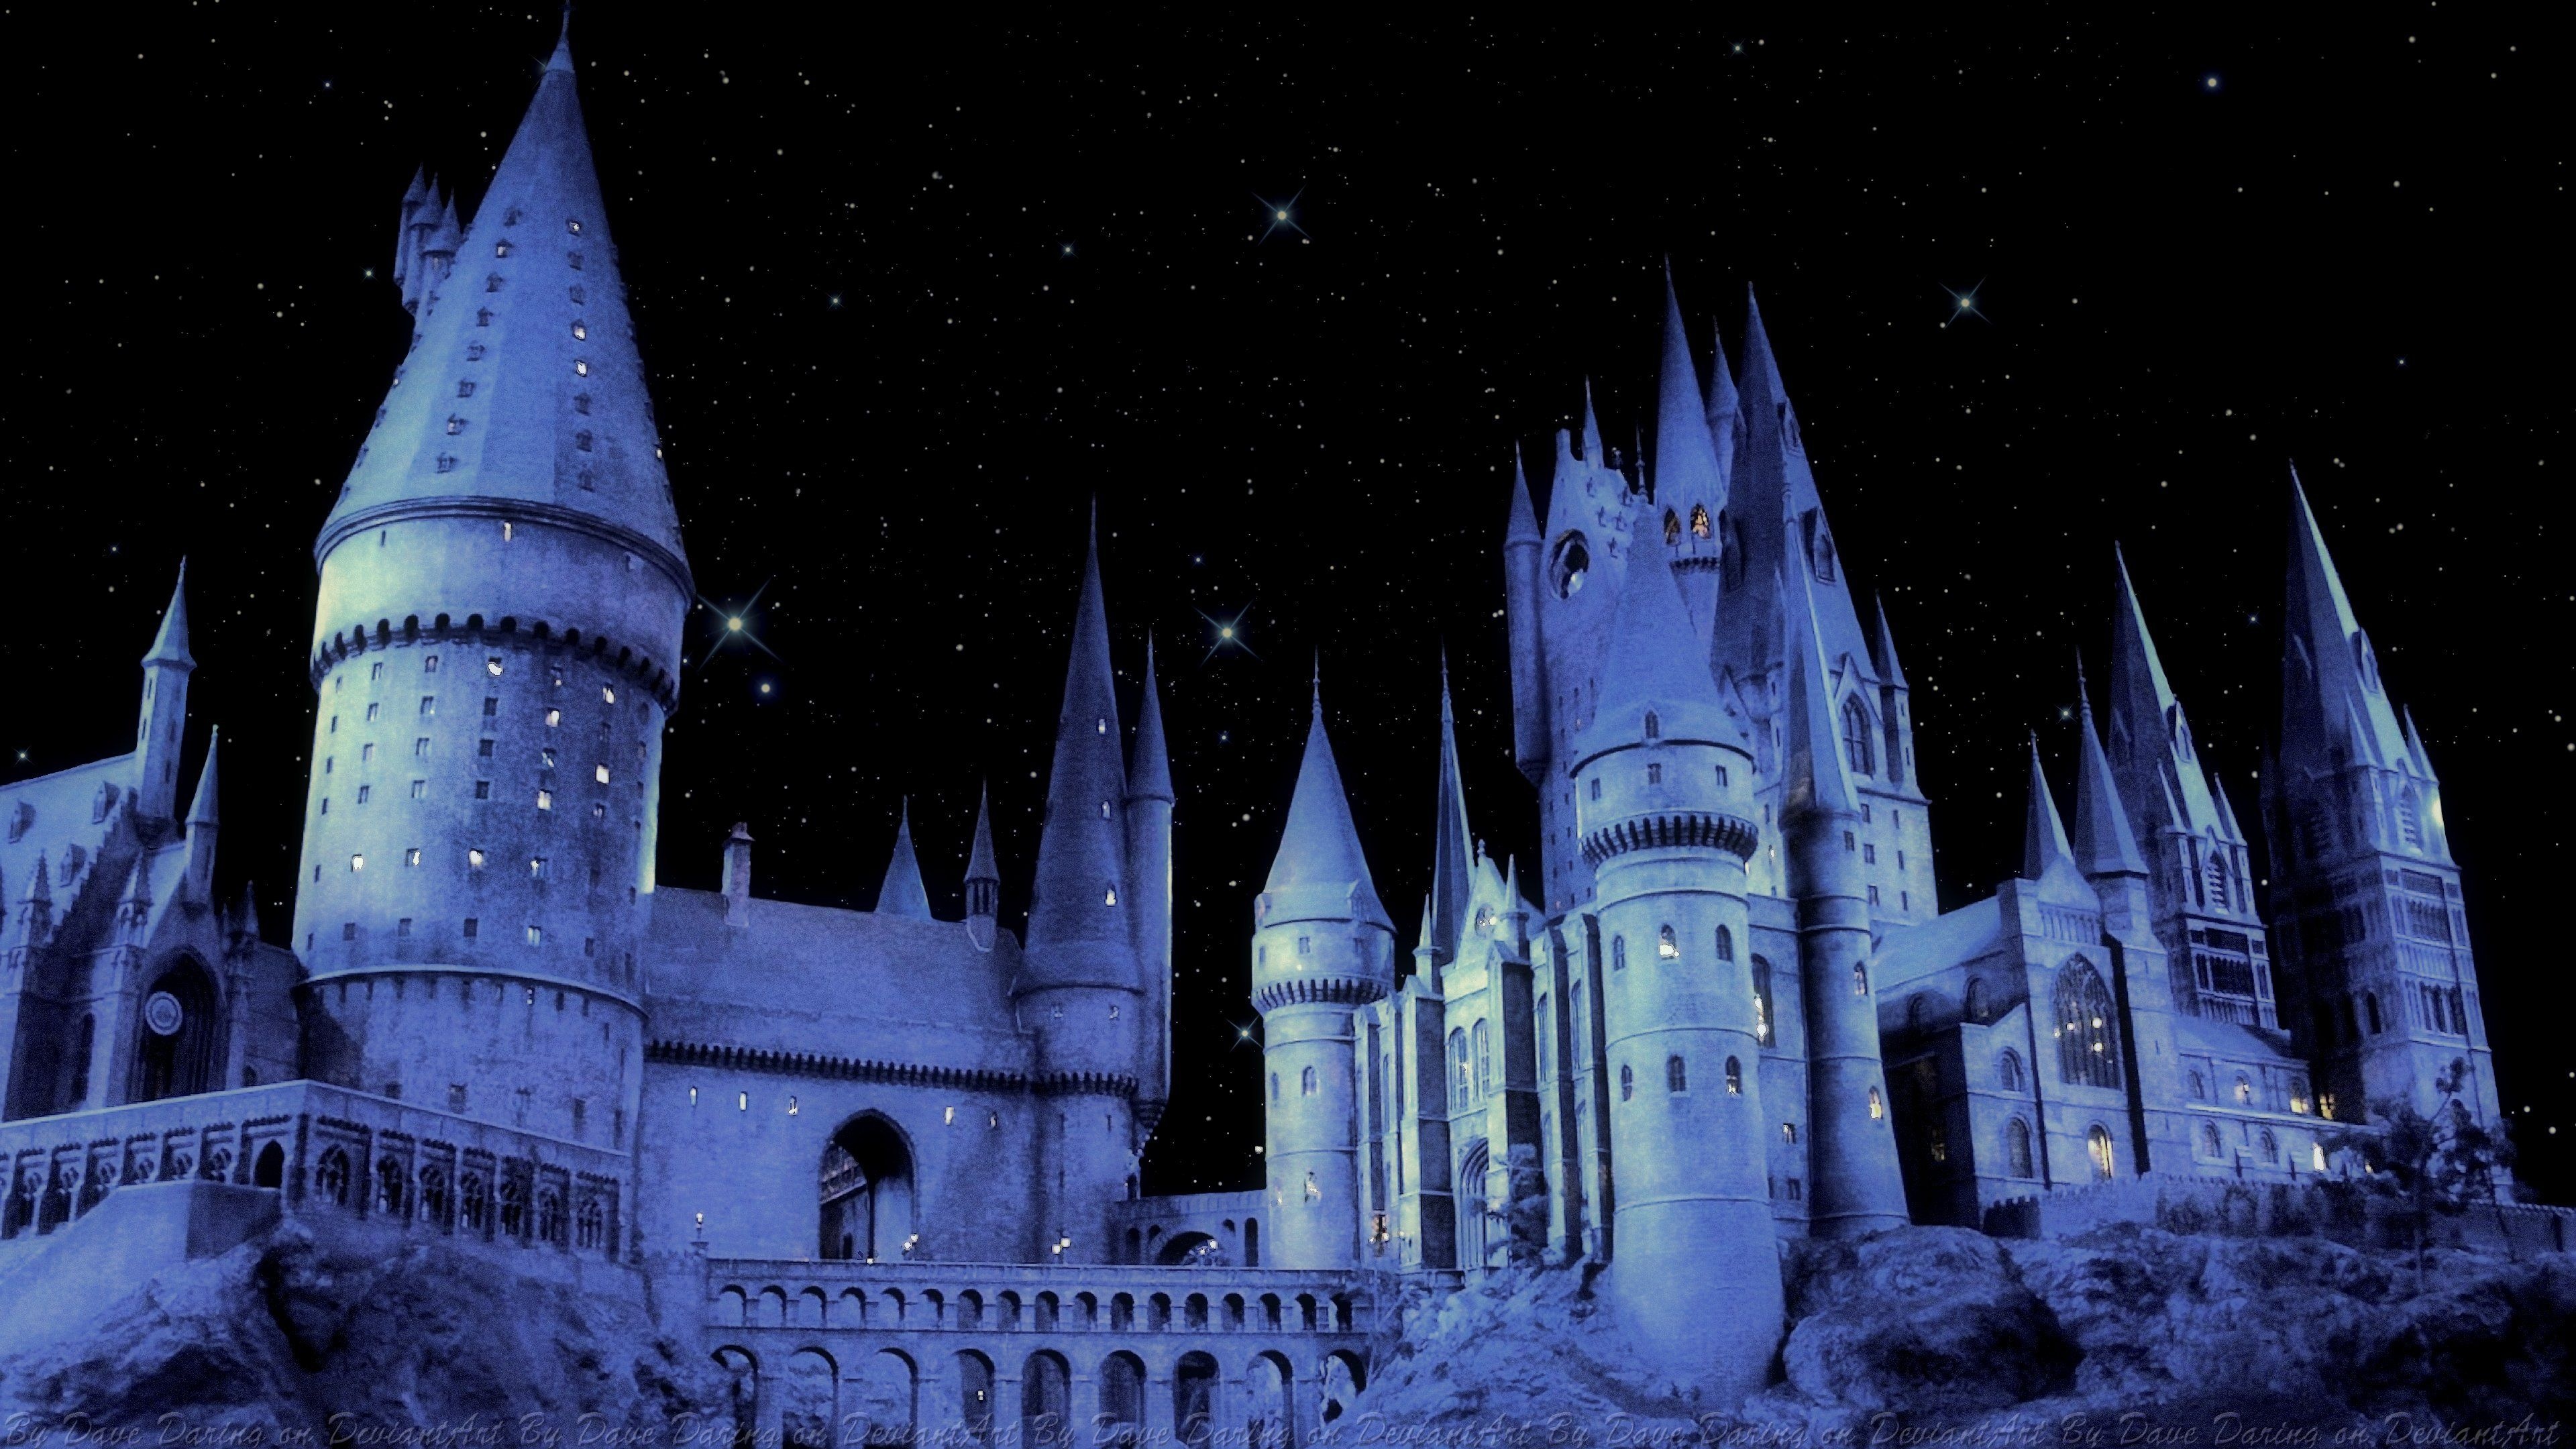 Hogwarts, Cool castle wallpapers, Mystical ambiance, Wizarding magic, 3840x2160 4K Desktop